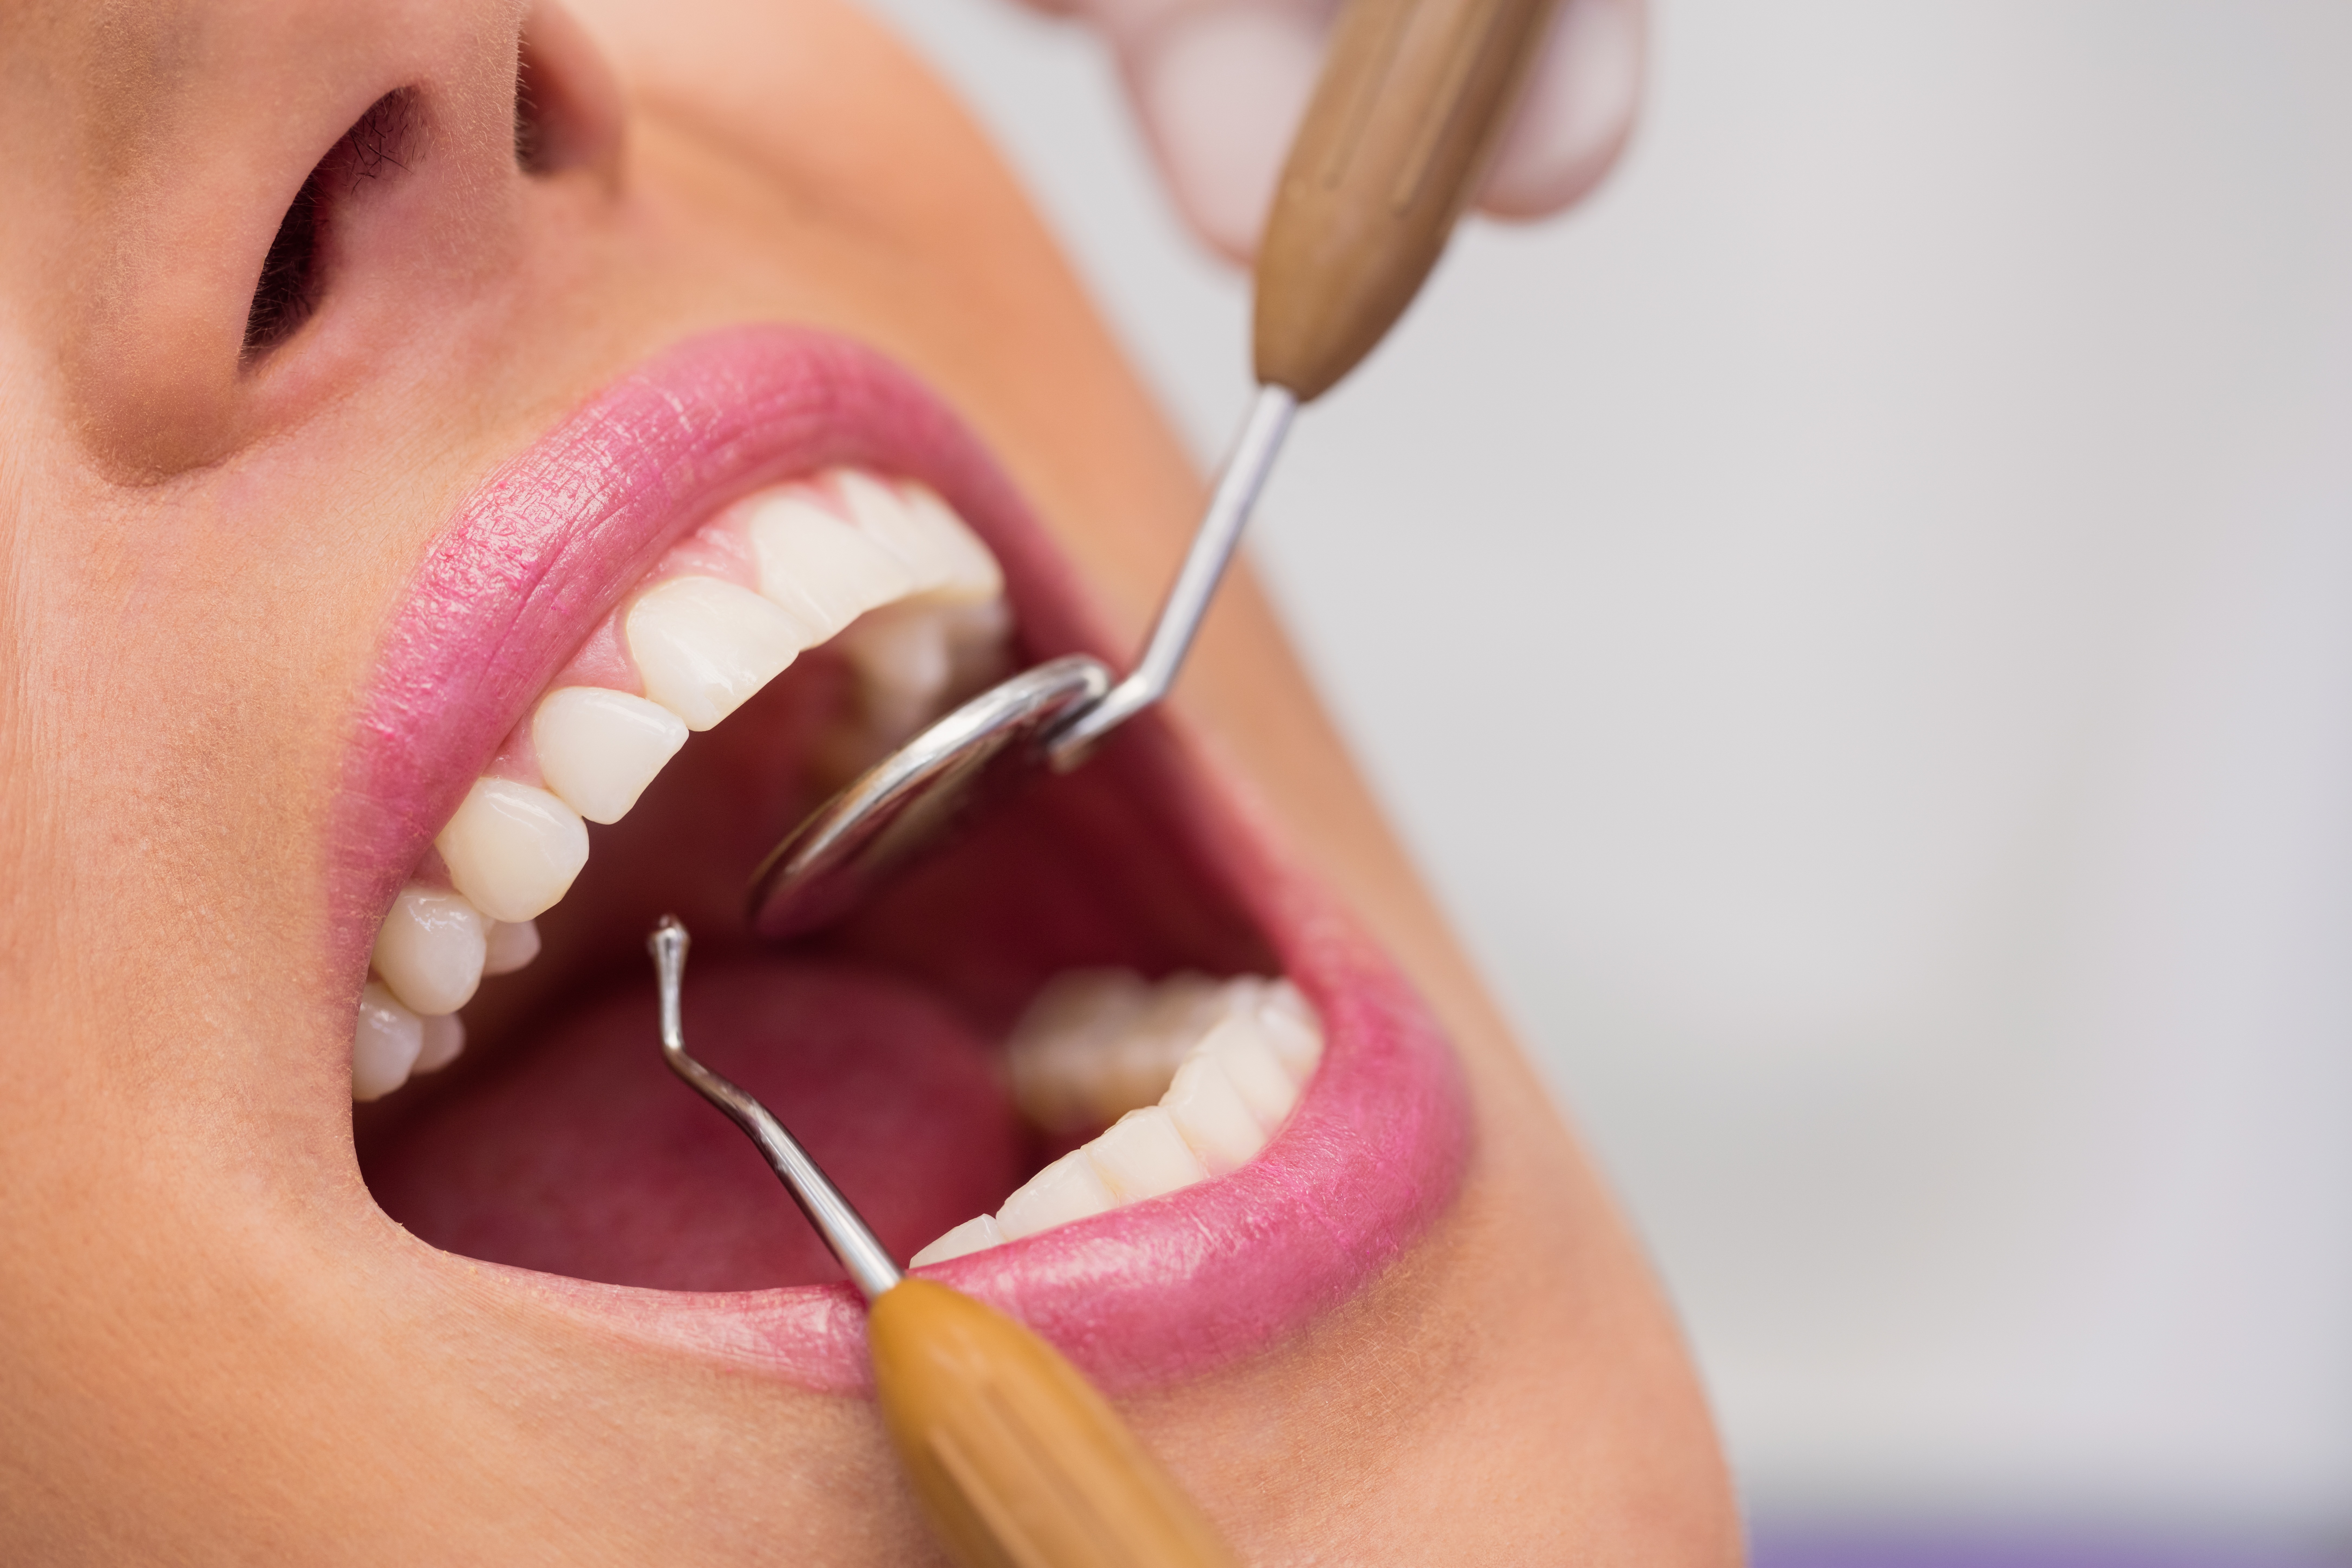 Dental crown treatment